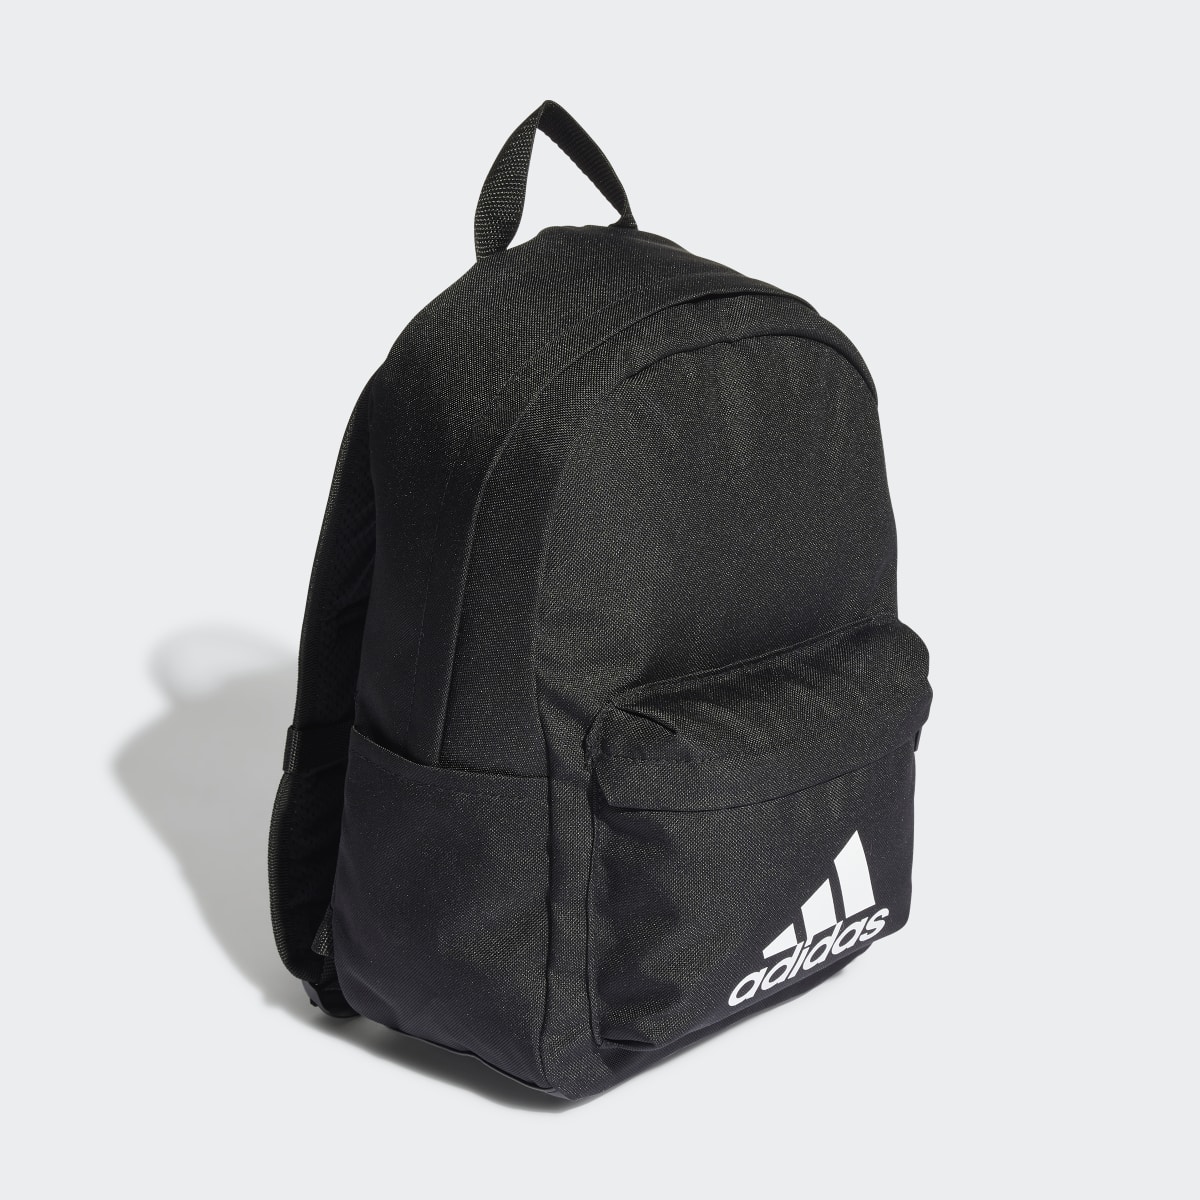 Adidas Backpack. 4